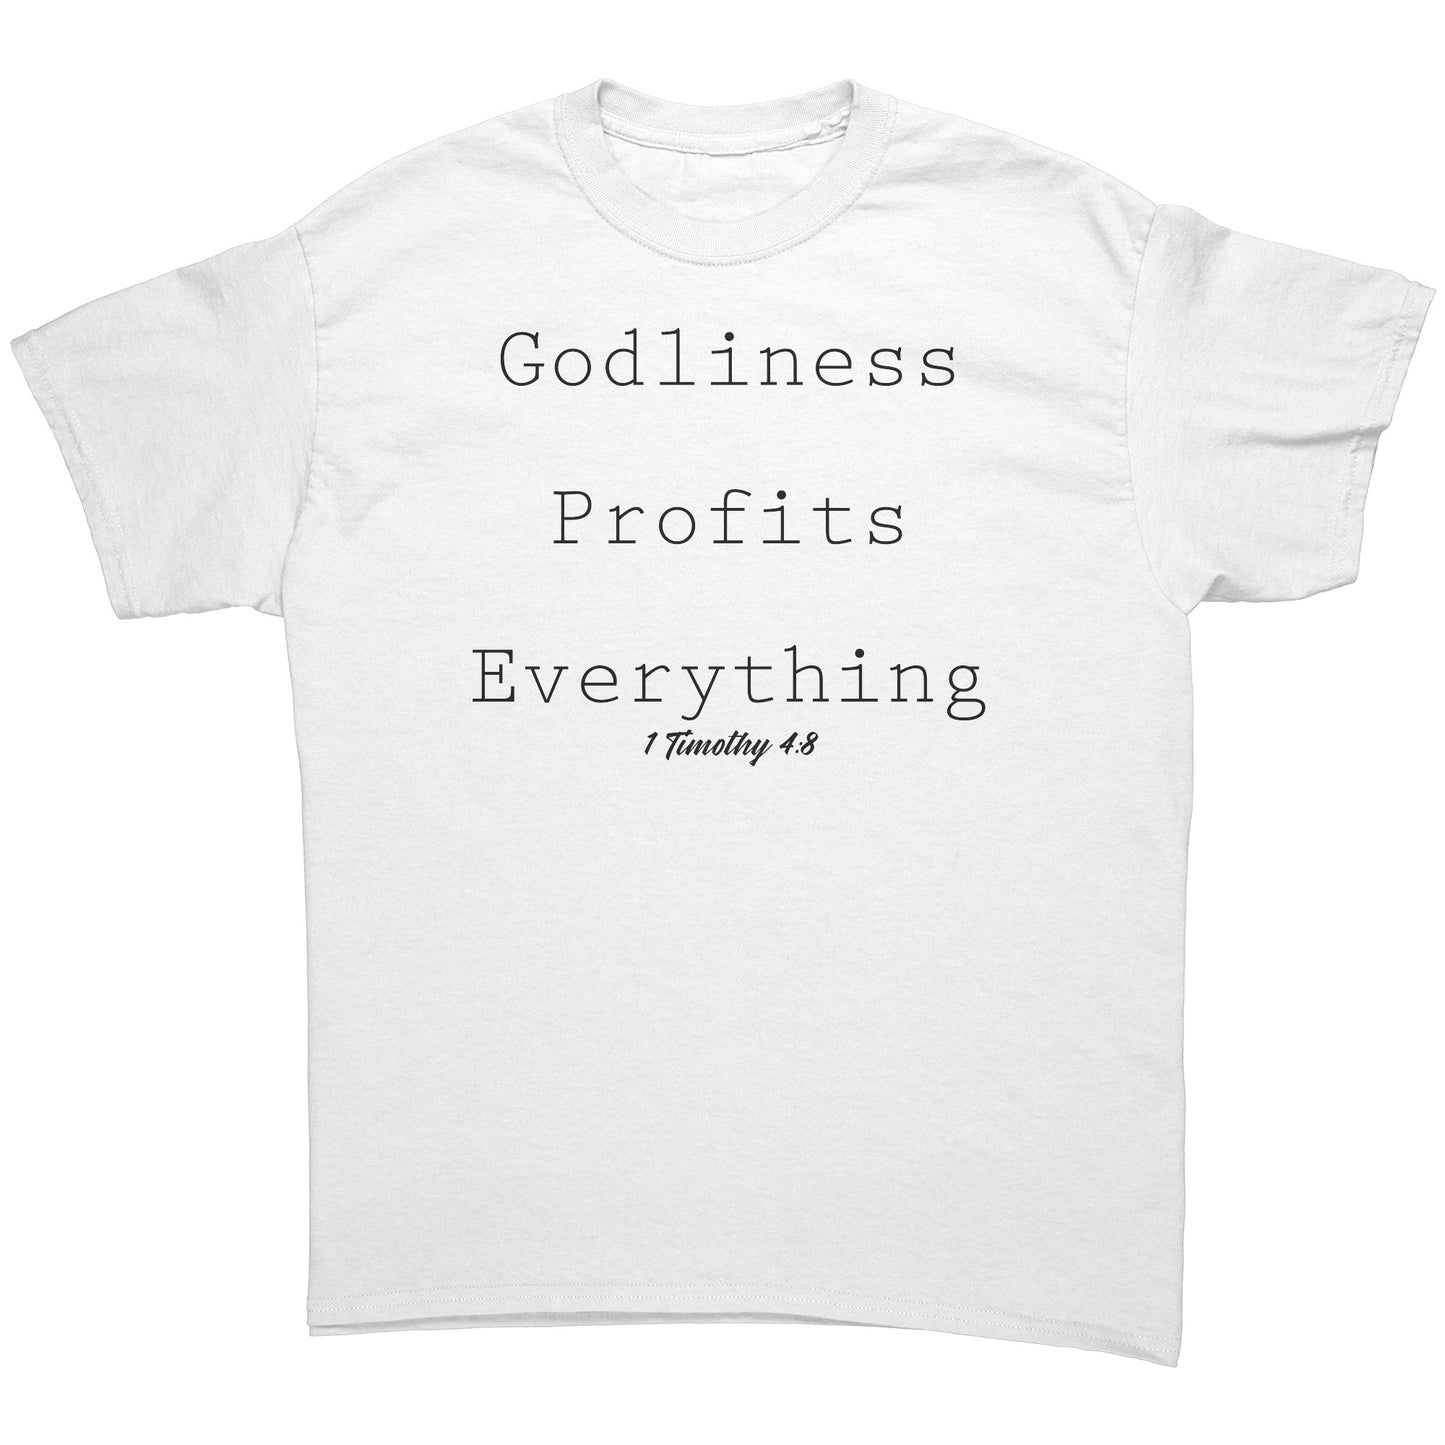 Godliness Profits Everything 1 Timothy 4:8 Men's T-Shirt Part 1